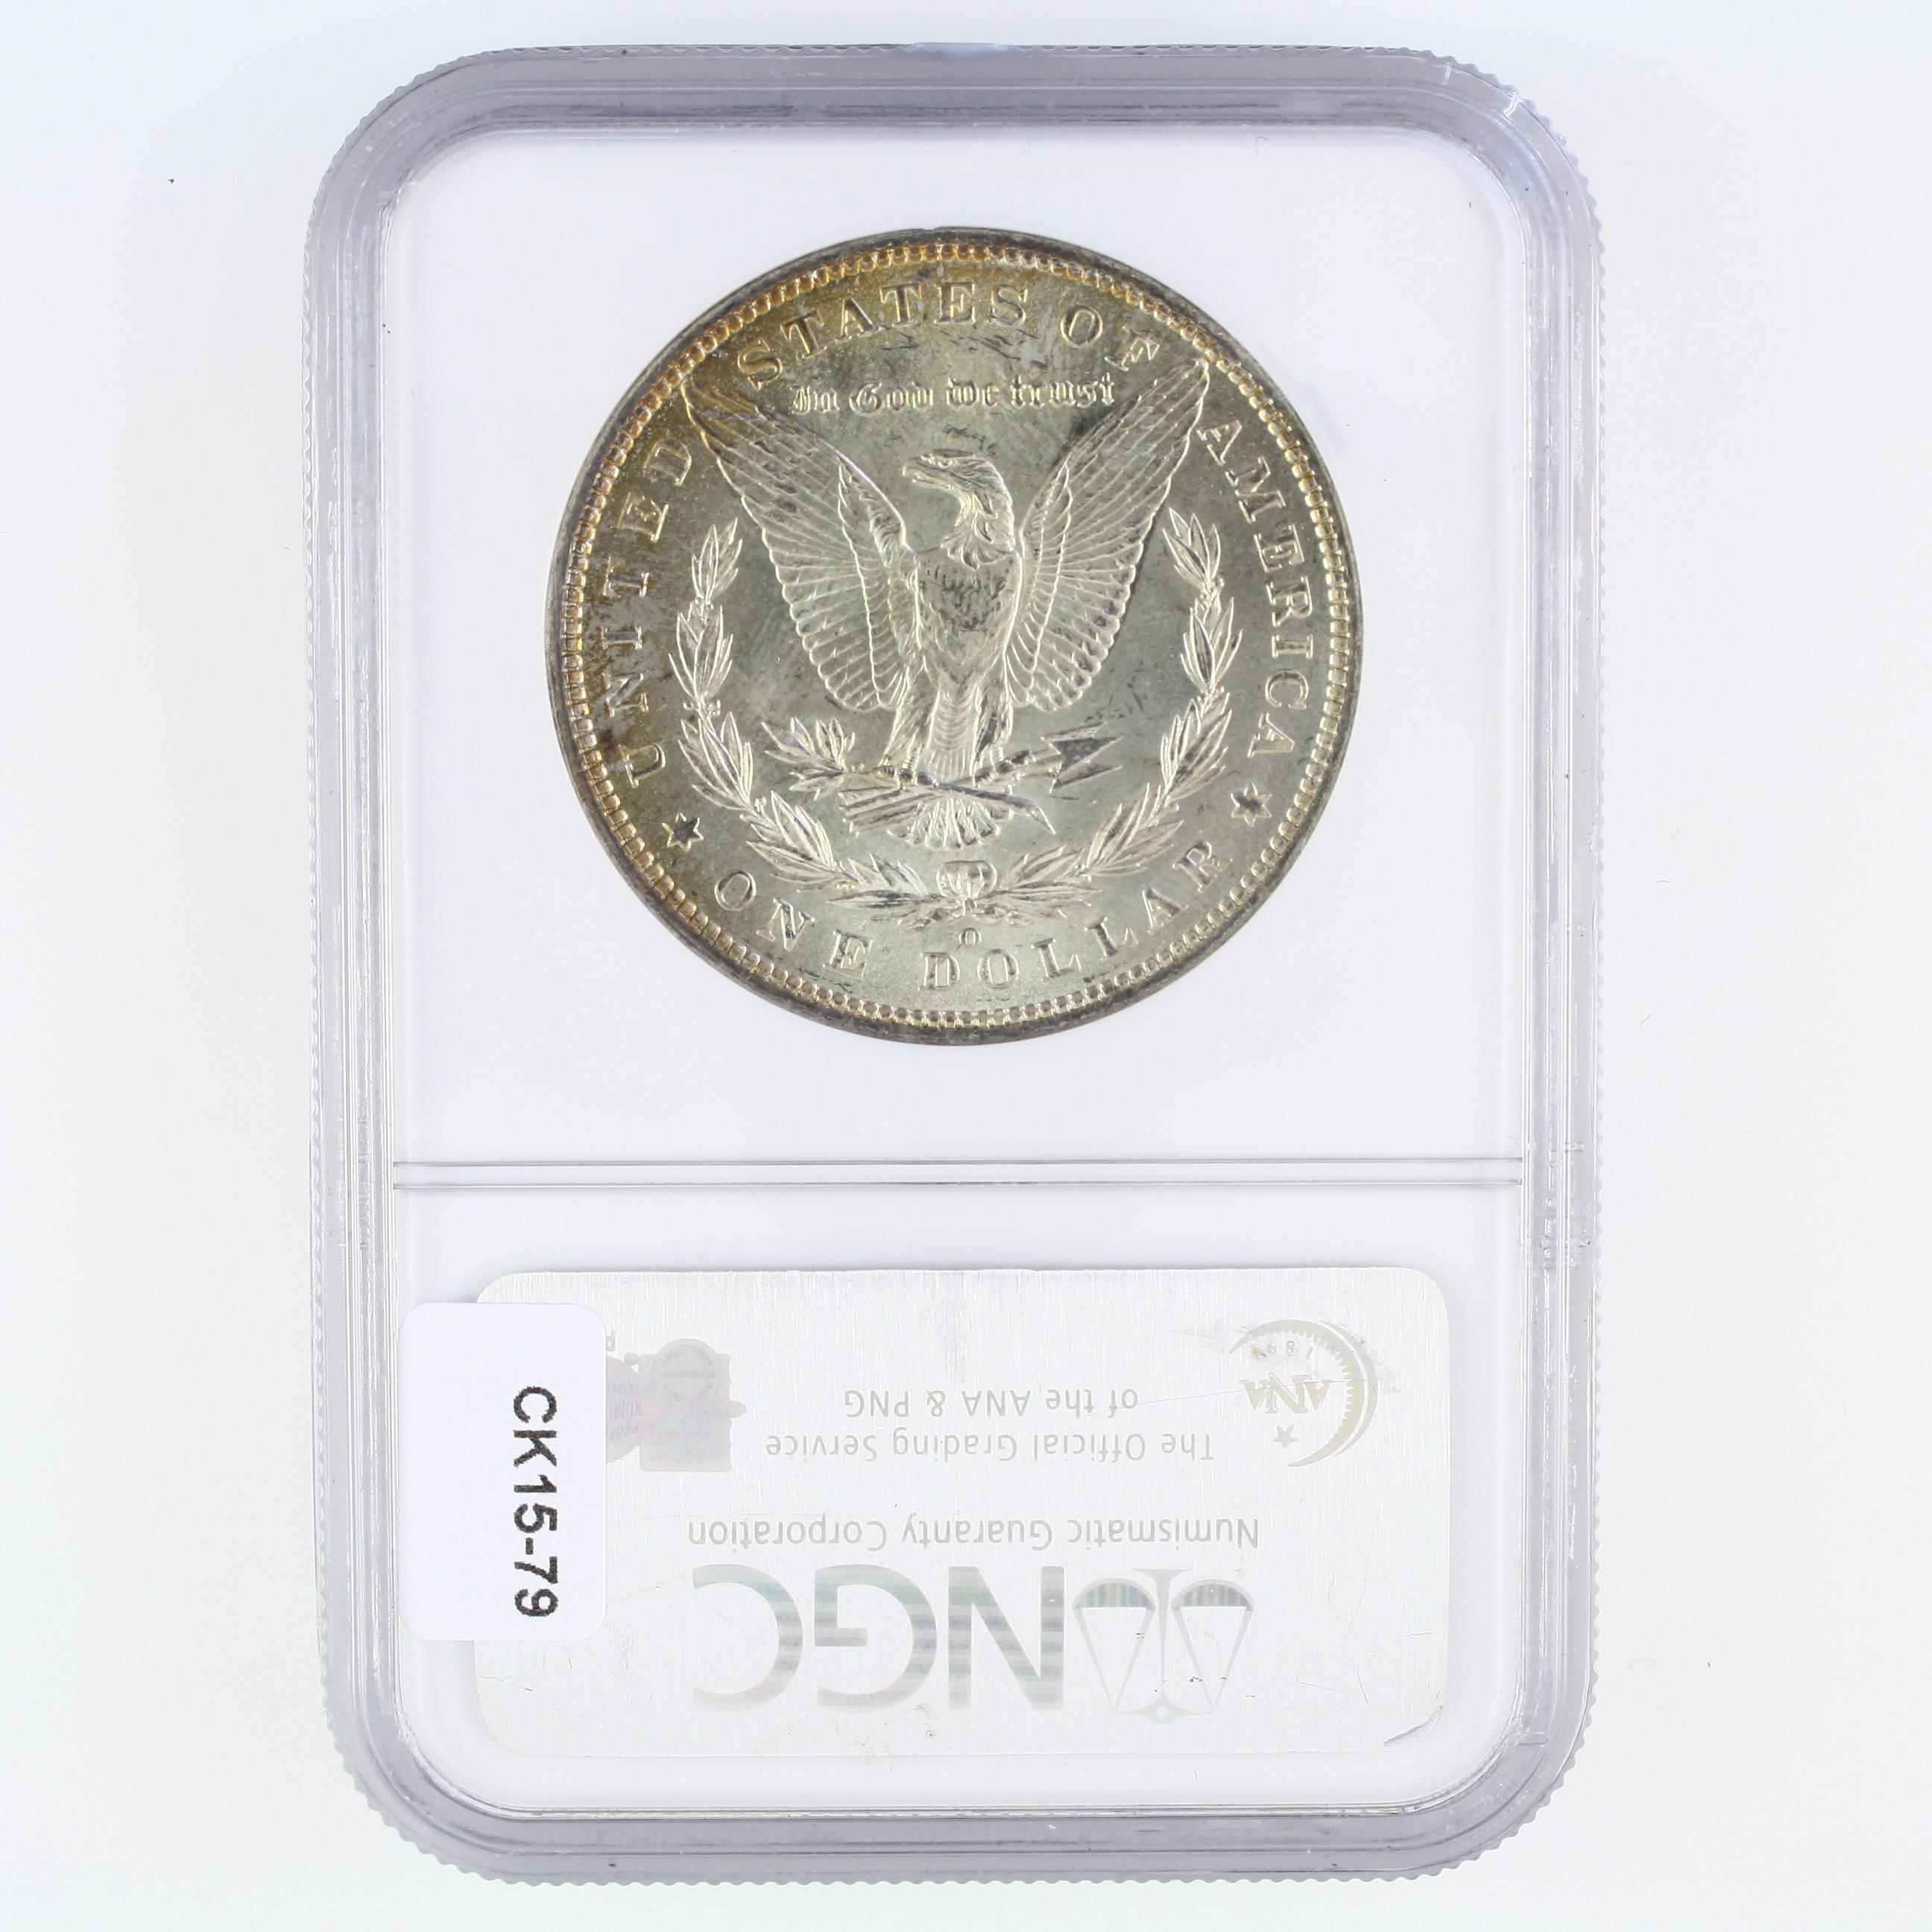 Certified 1900-O U.S. Morgan silver dollar